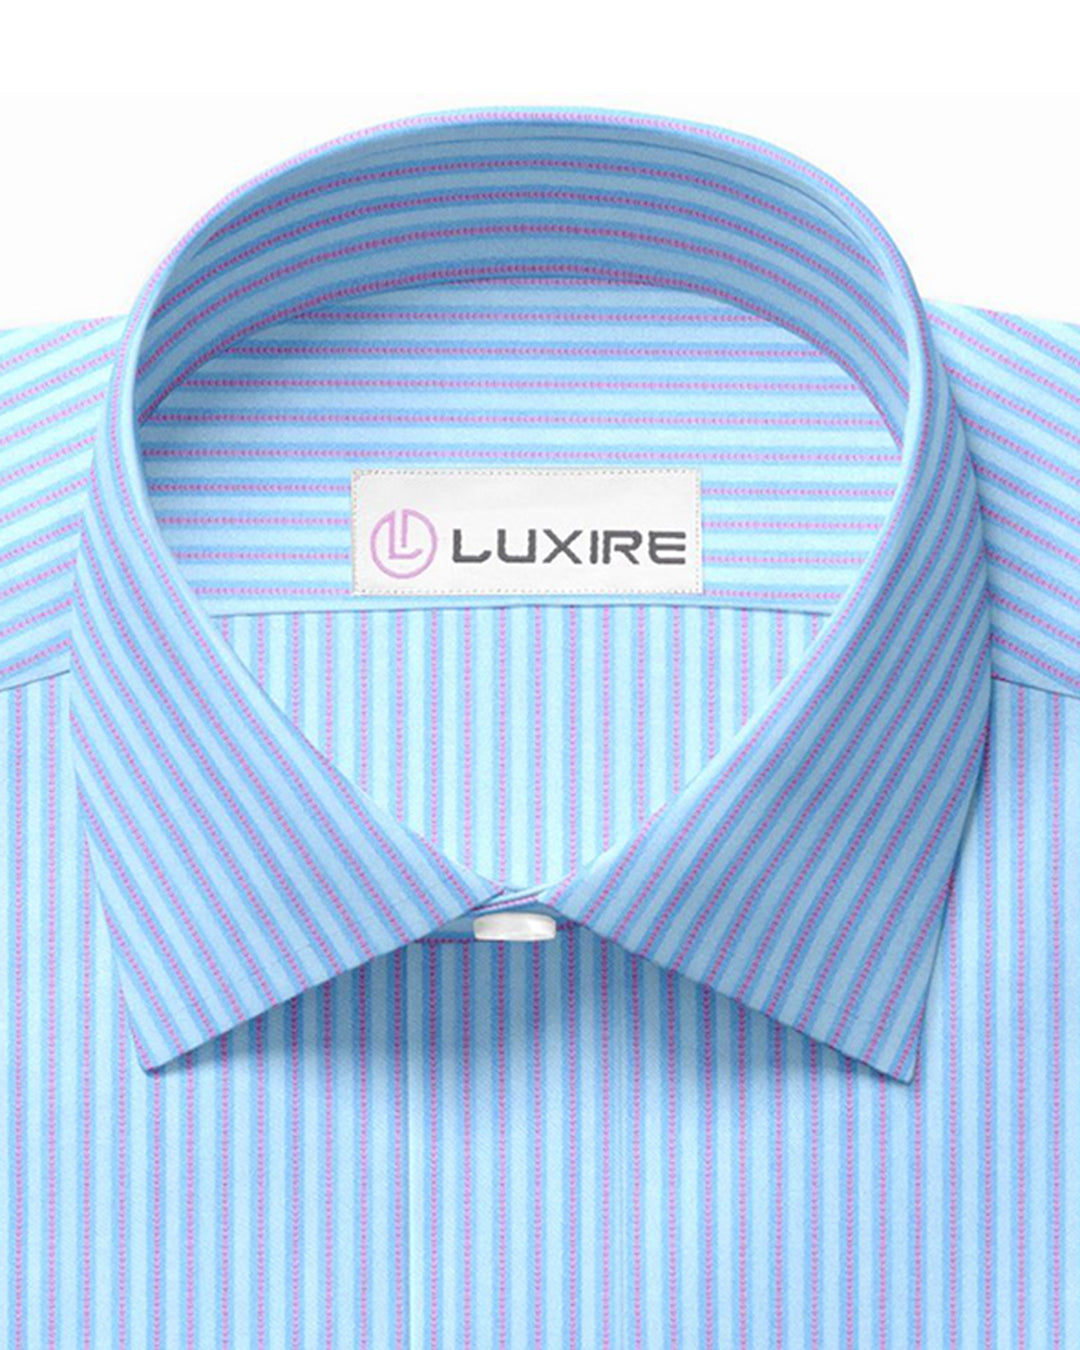 Luxire Privilege Collection Subtle Stripes on Blue